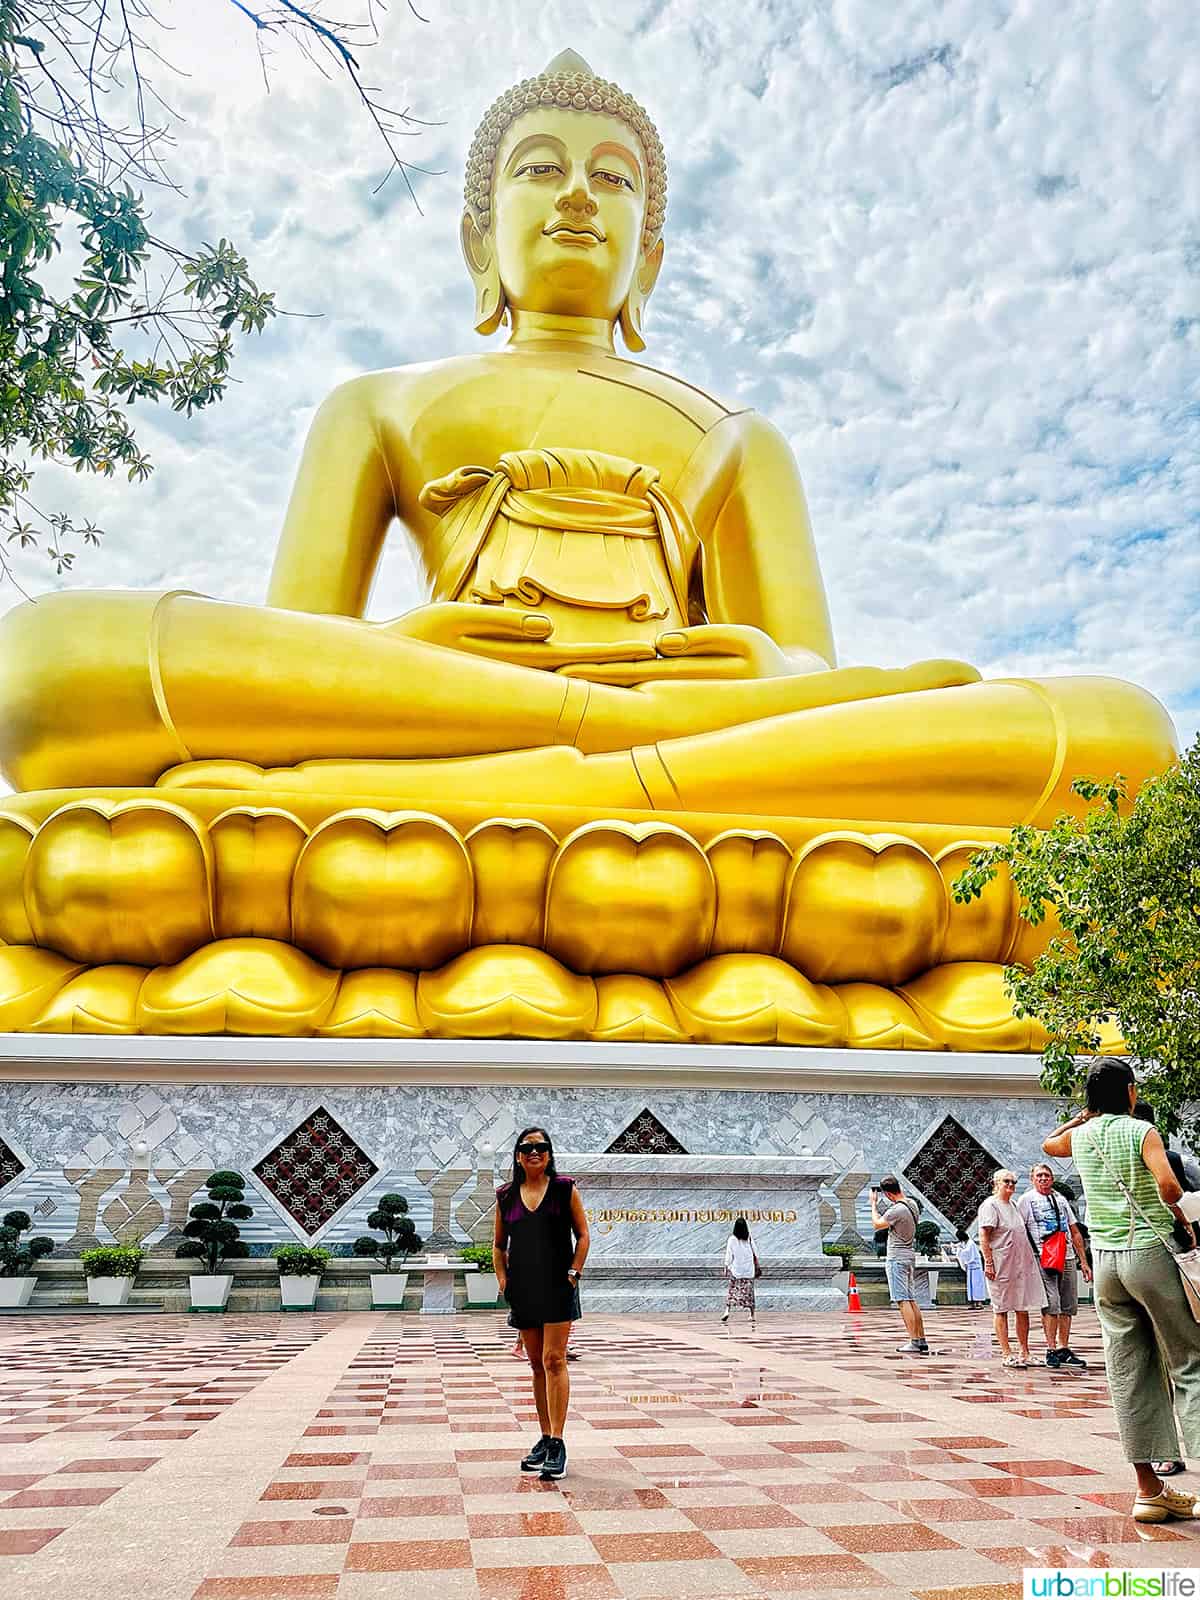 Marlynn Jayme Schotland in front of the big gold buddha in Bangkok Thailand.